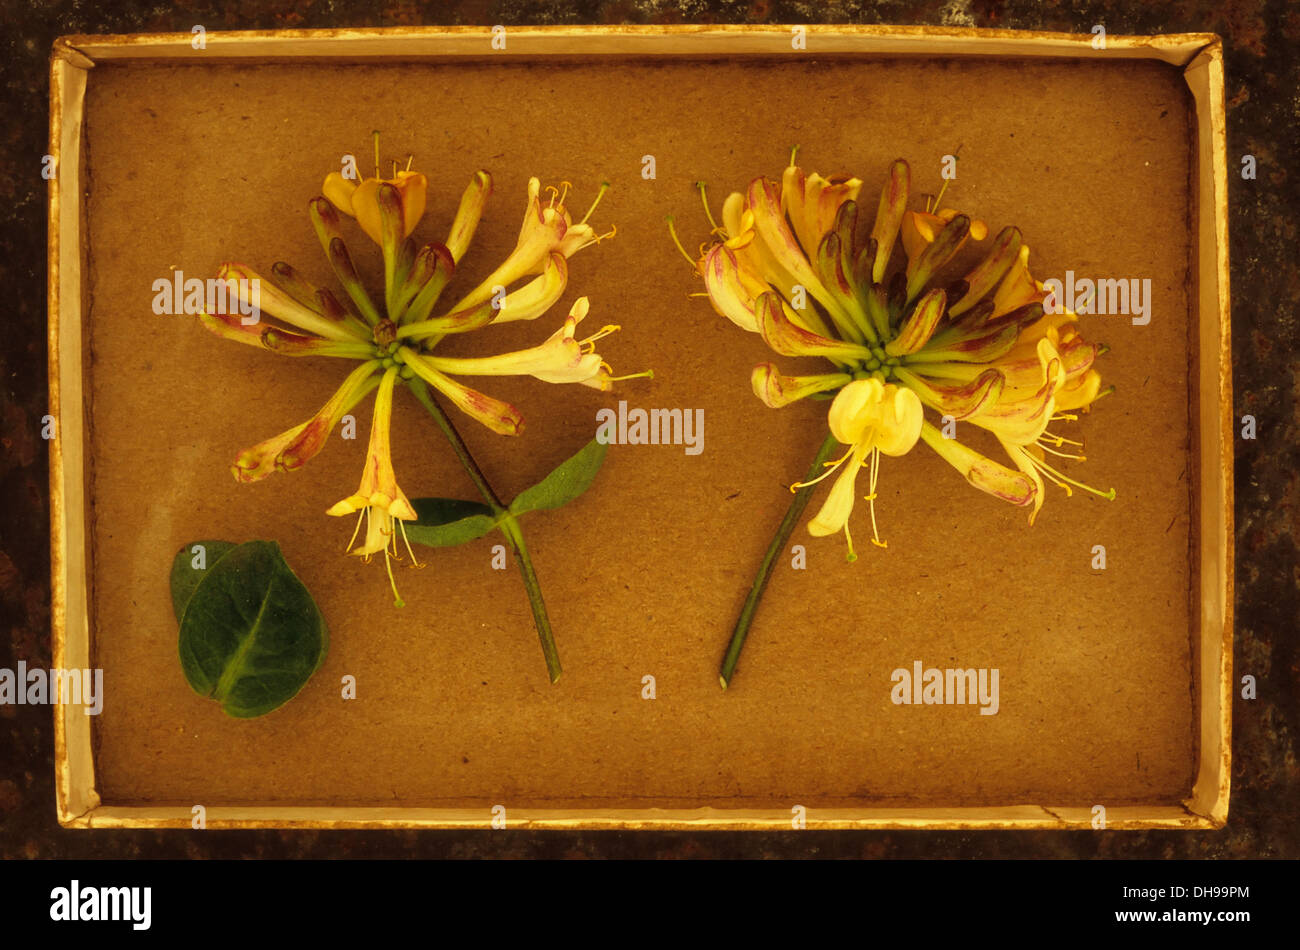 Honeysucklle, Lonicera periclymenum. Studio shot of two flower heads of Honeysuckle or Woodbine arranged in card tray. Stock Photo